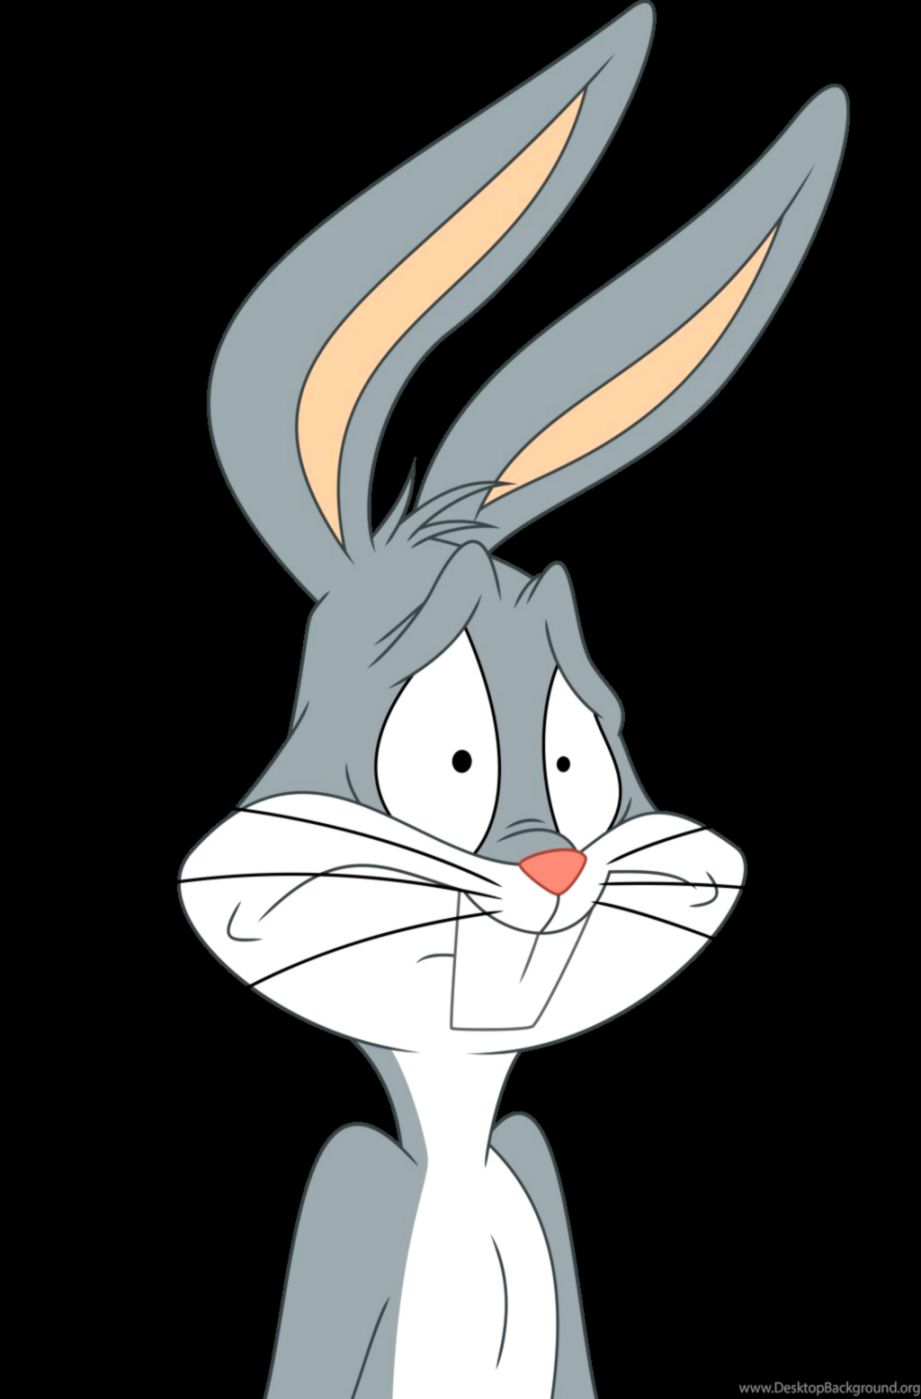 Bugs bunny, the famous cartoon character - Bugs Bunny